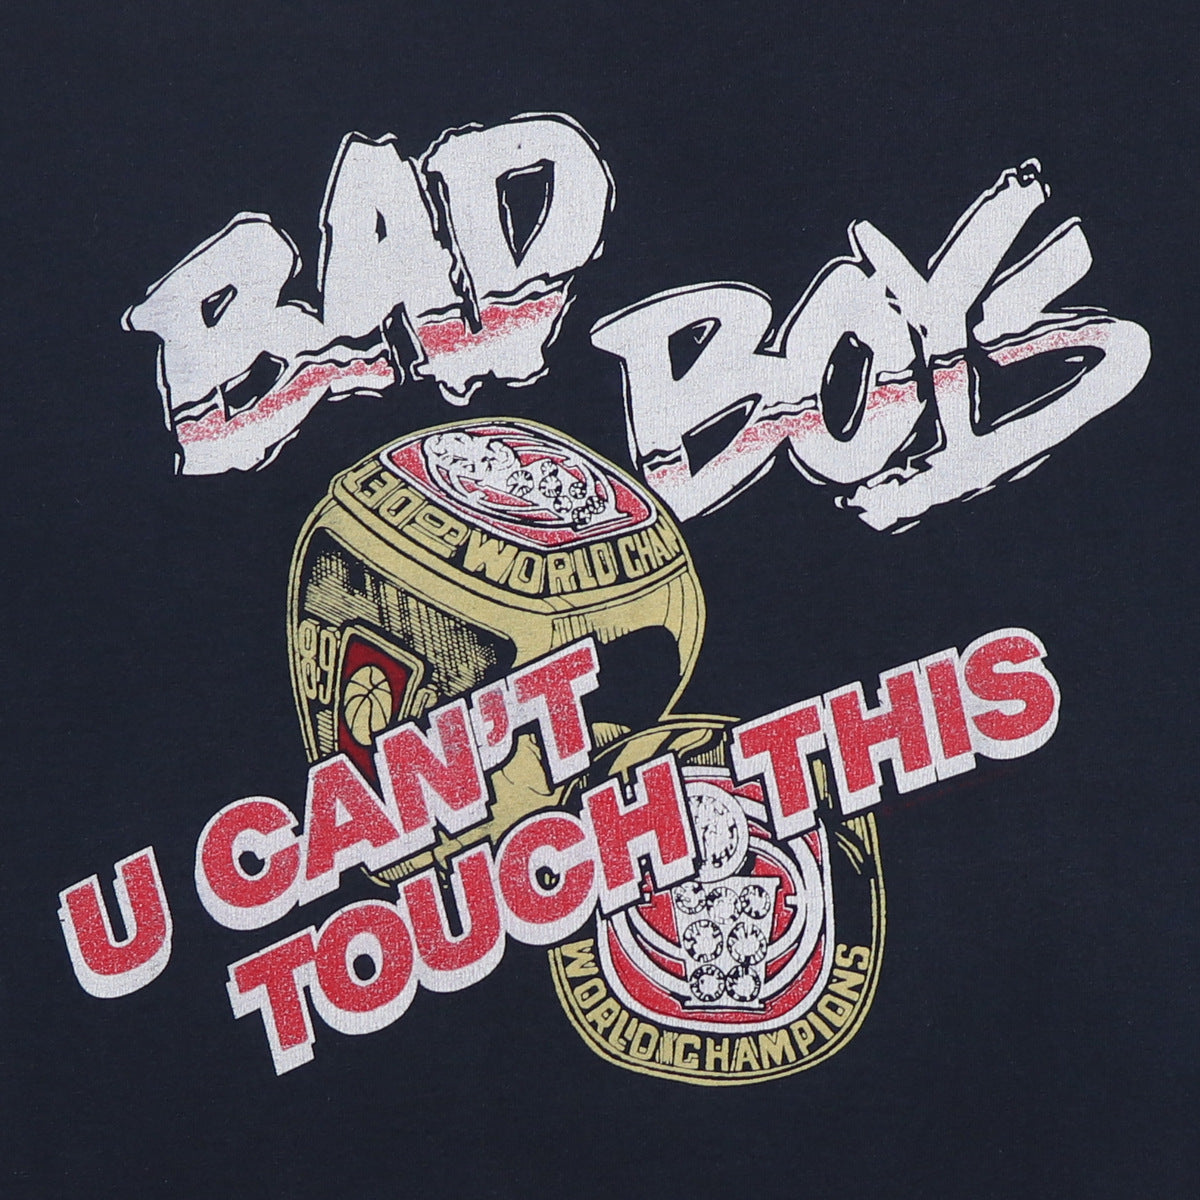 Detroit Bad Boys Black Hammer Time T-Shirt X-Large